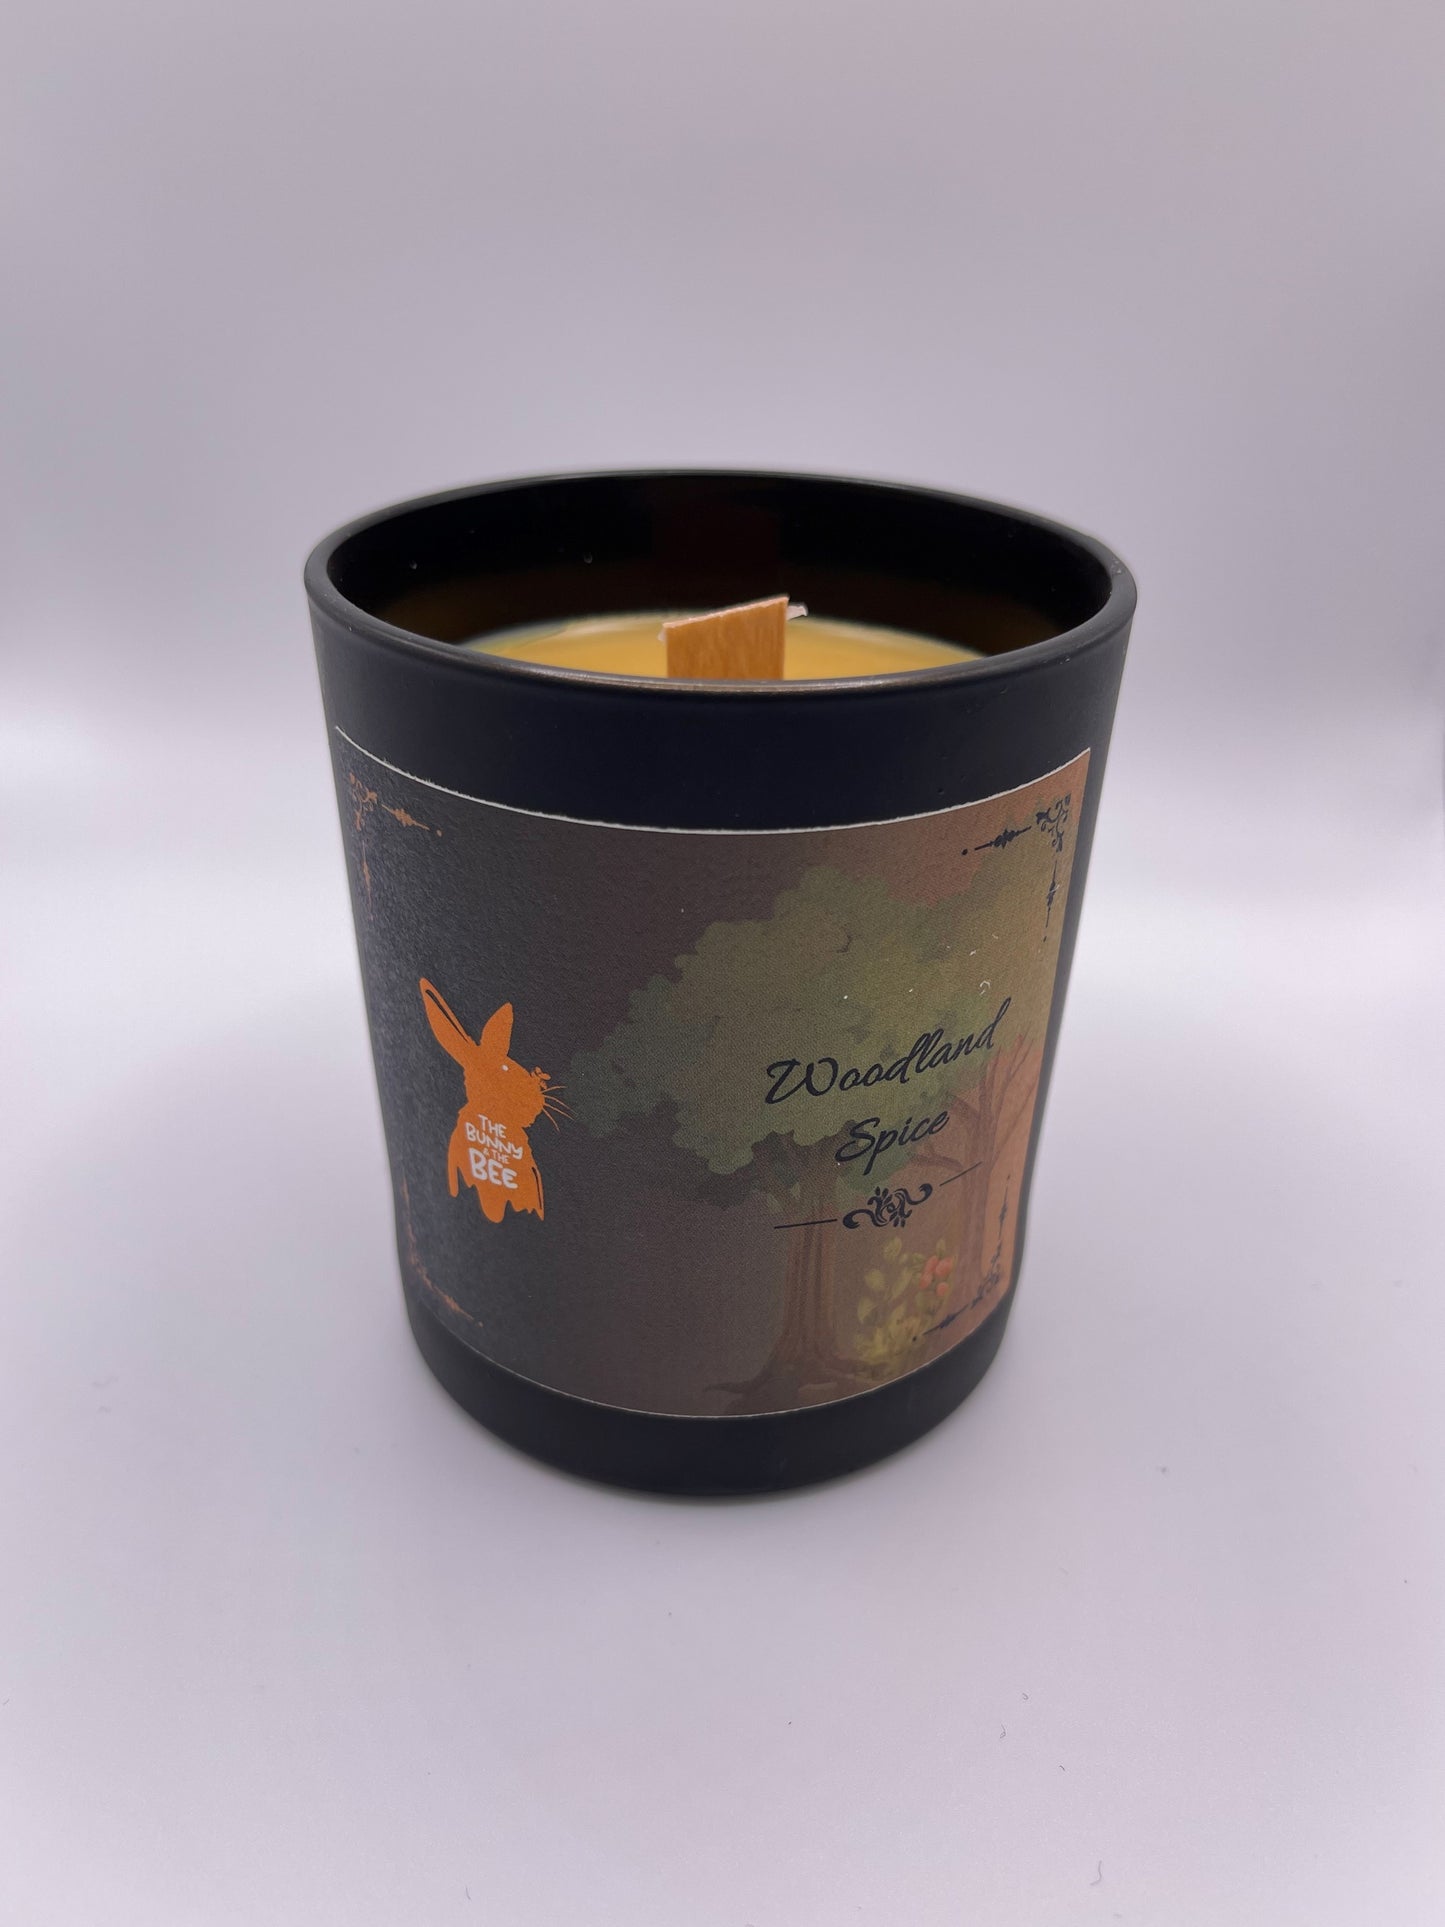 Woodland Spice Candle